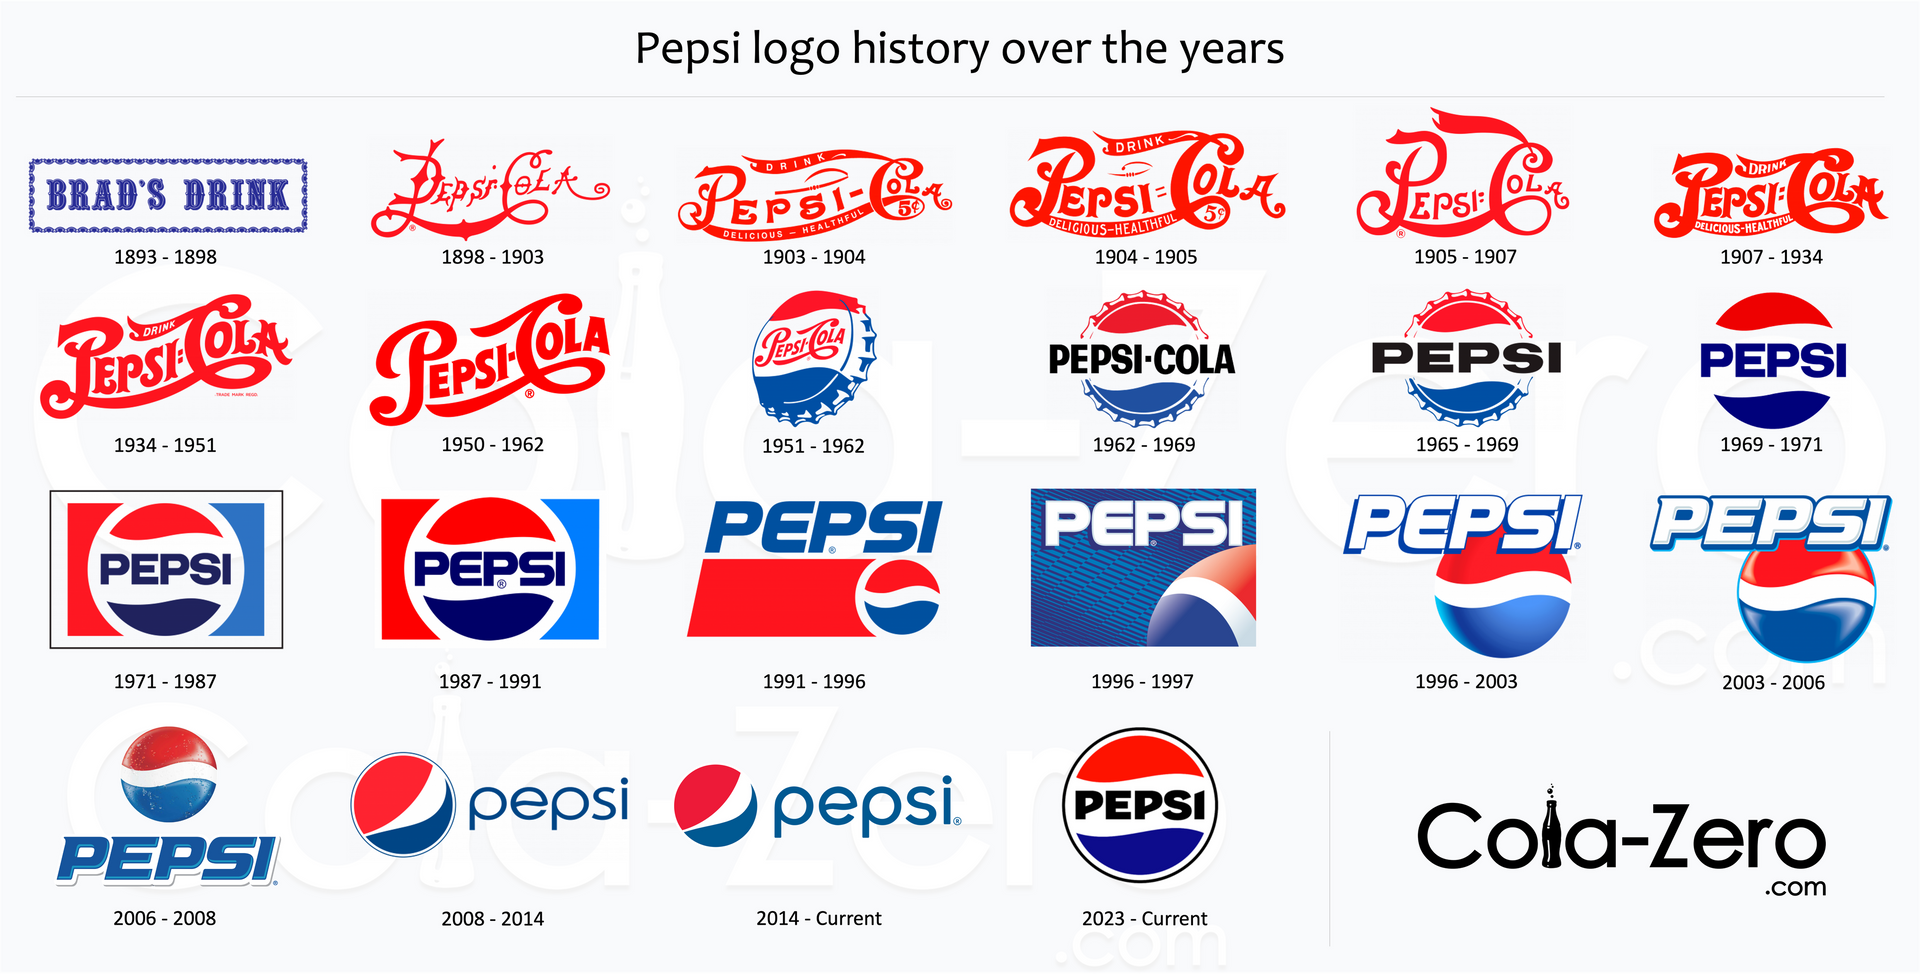 Pepsi-Cola_PepsiCo-Inc-Company_logos-summary_logo-evolution-over-the-years_design_history_1893-current_blue-white-red-black_Cola-Zero.com_22_NEW